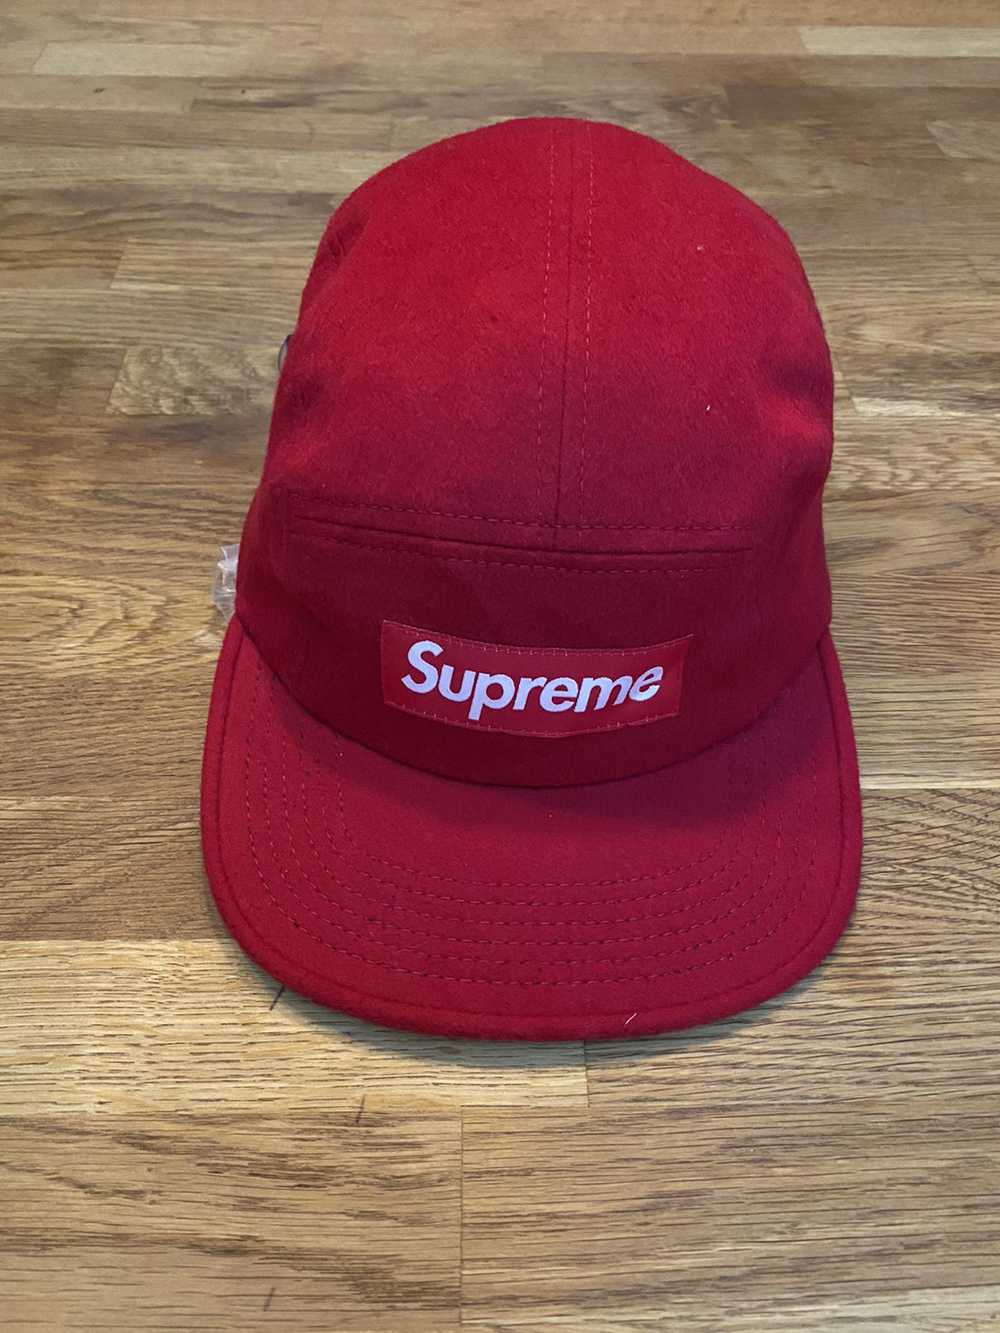 Supreme Supreme red camp cap - Gem